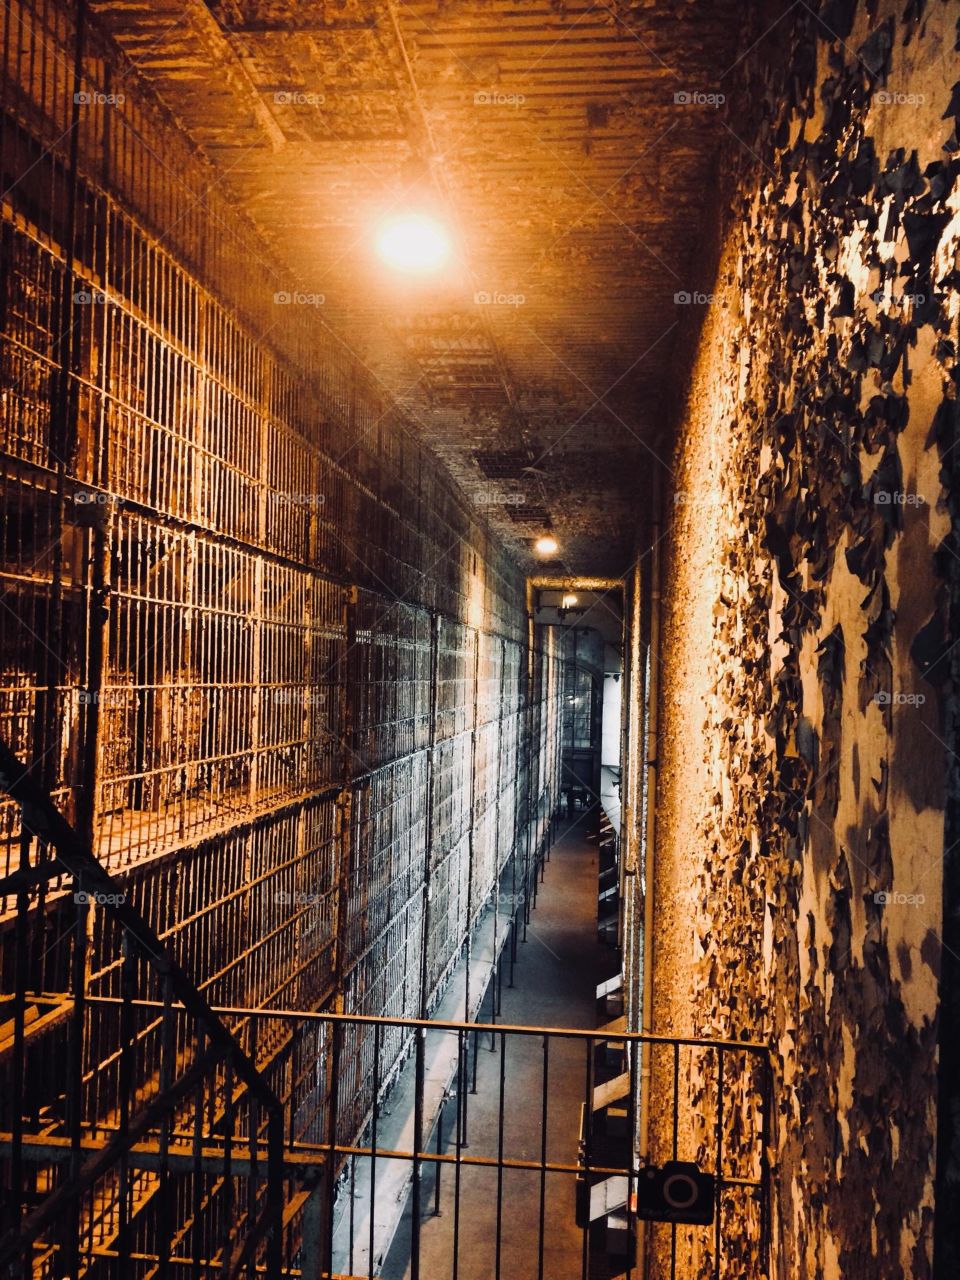 Abandoned Prison 